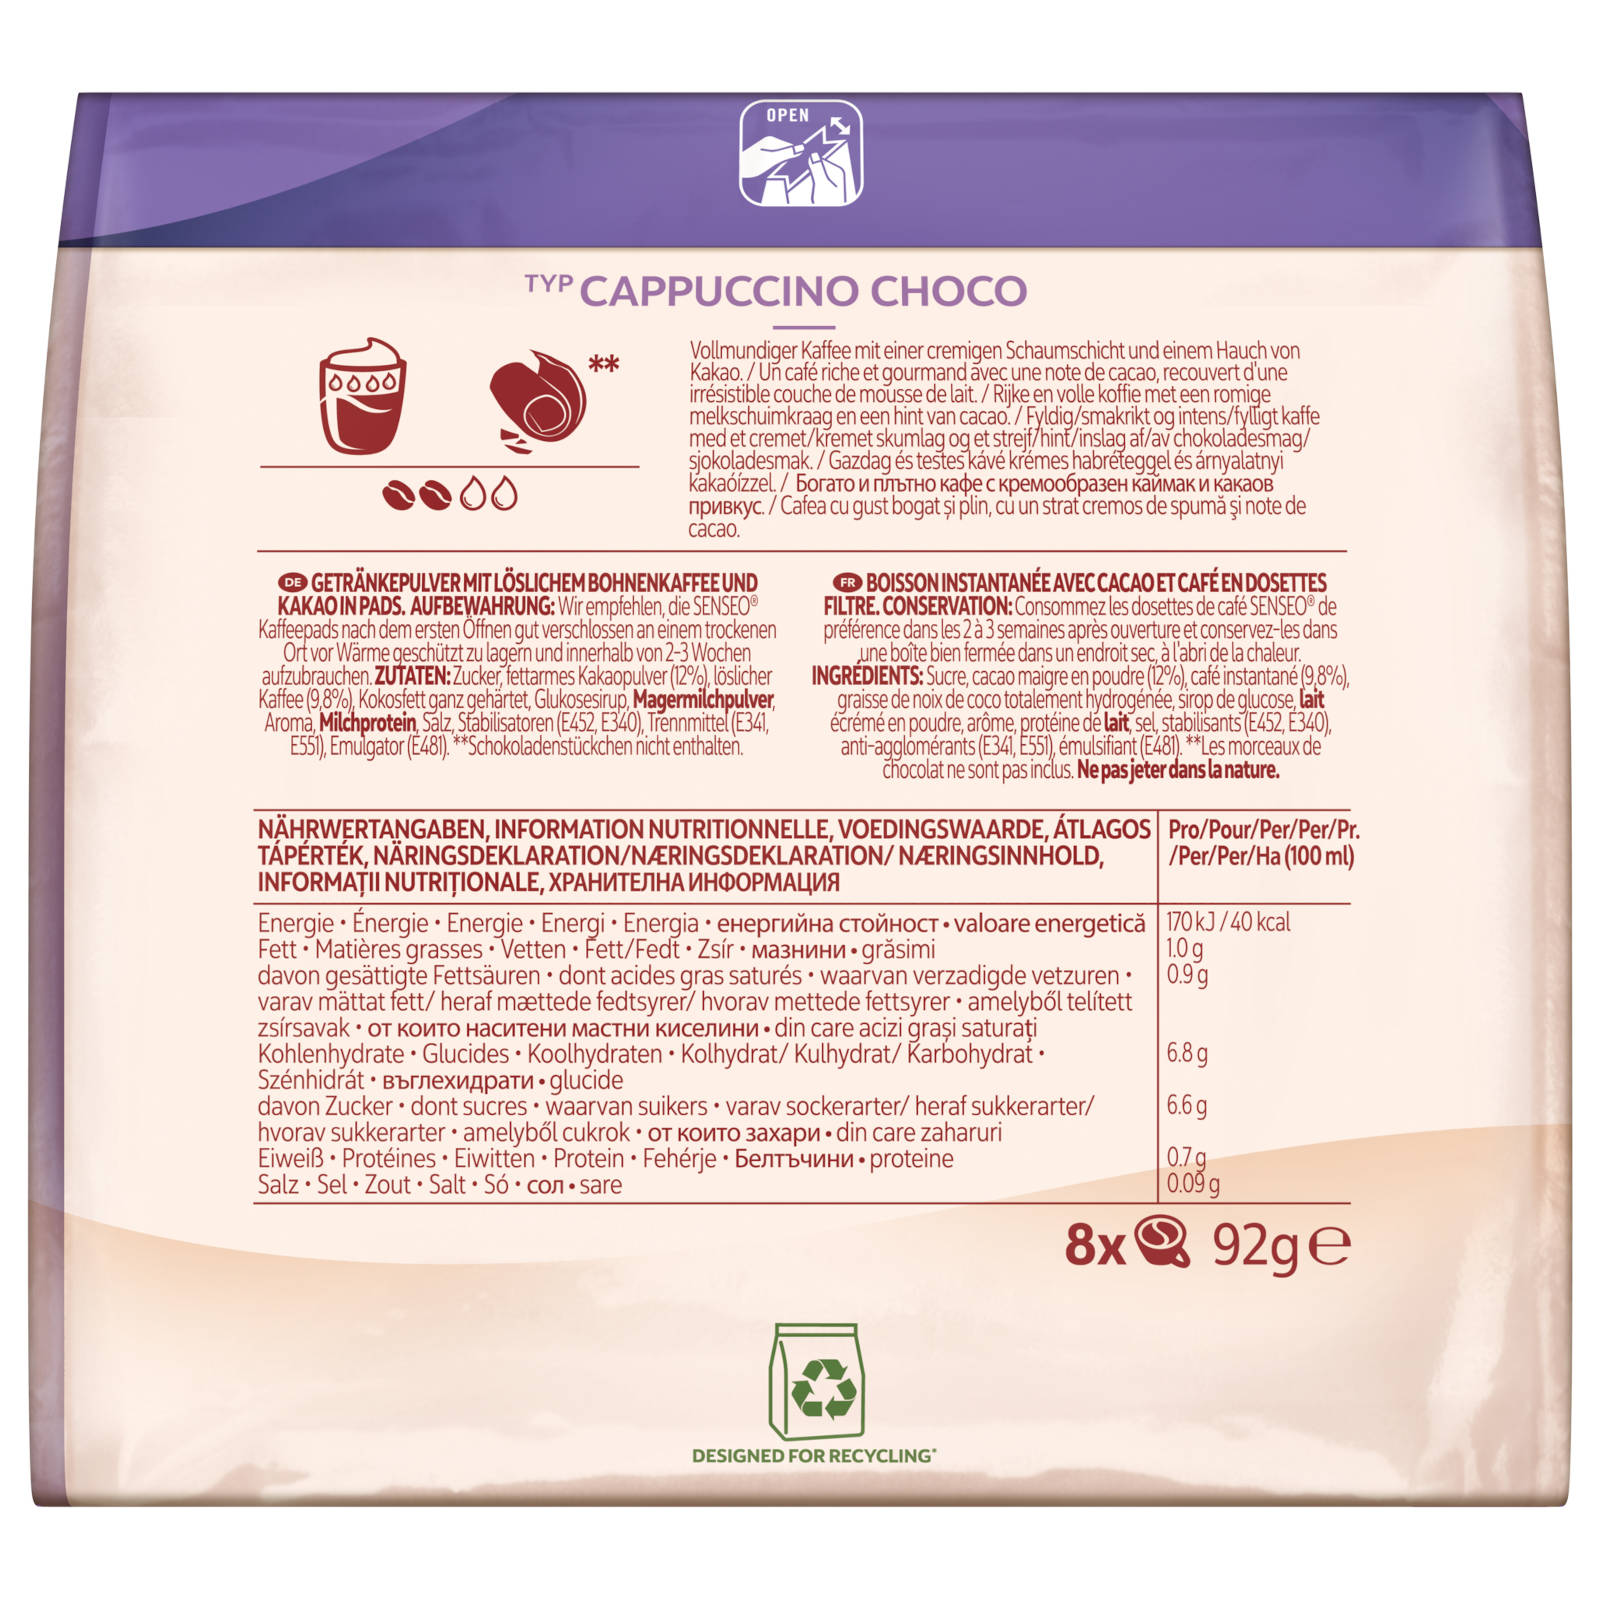 Choco 80 Kaffeepads Getränke Cappuccino SENSEO (Senseo Typ Soft- Pad-Maschine)